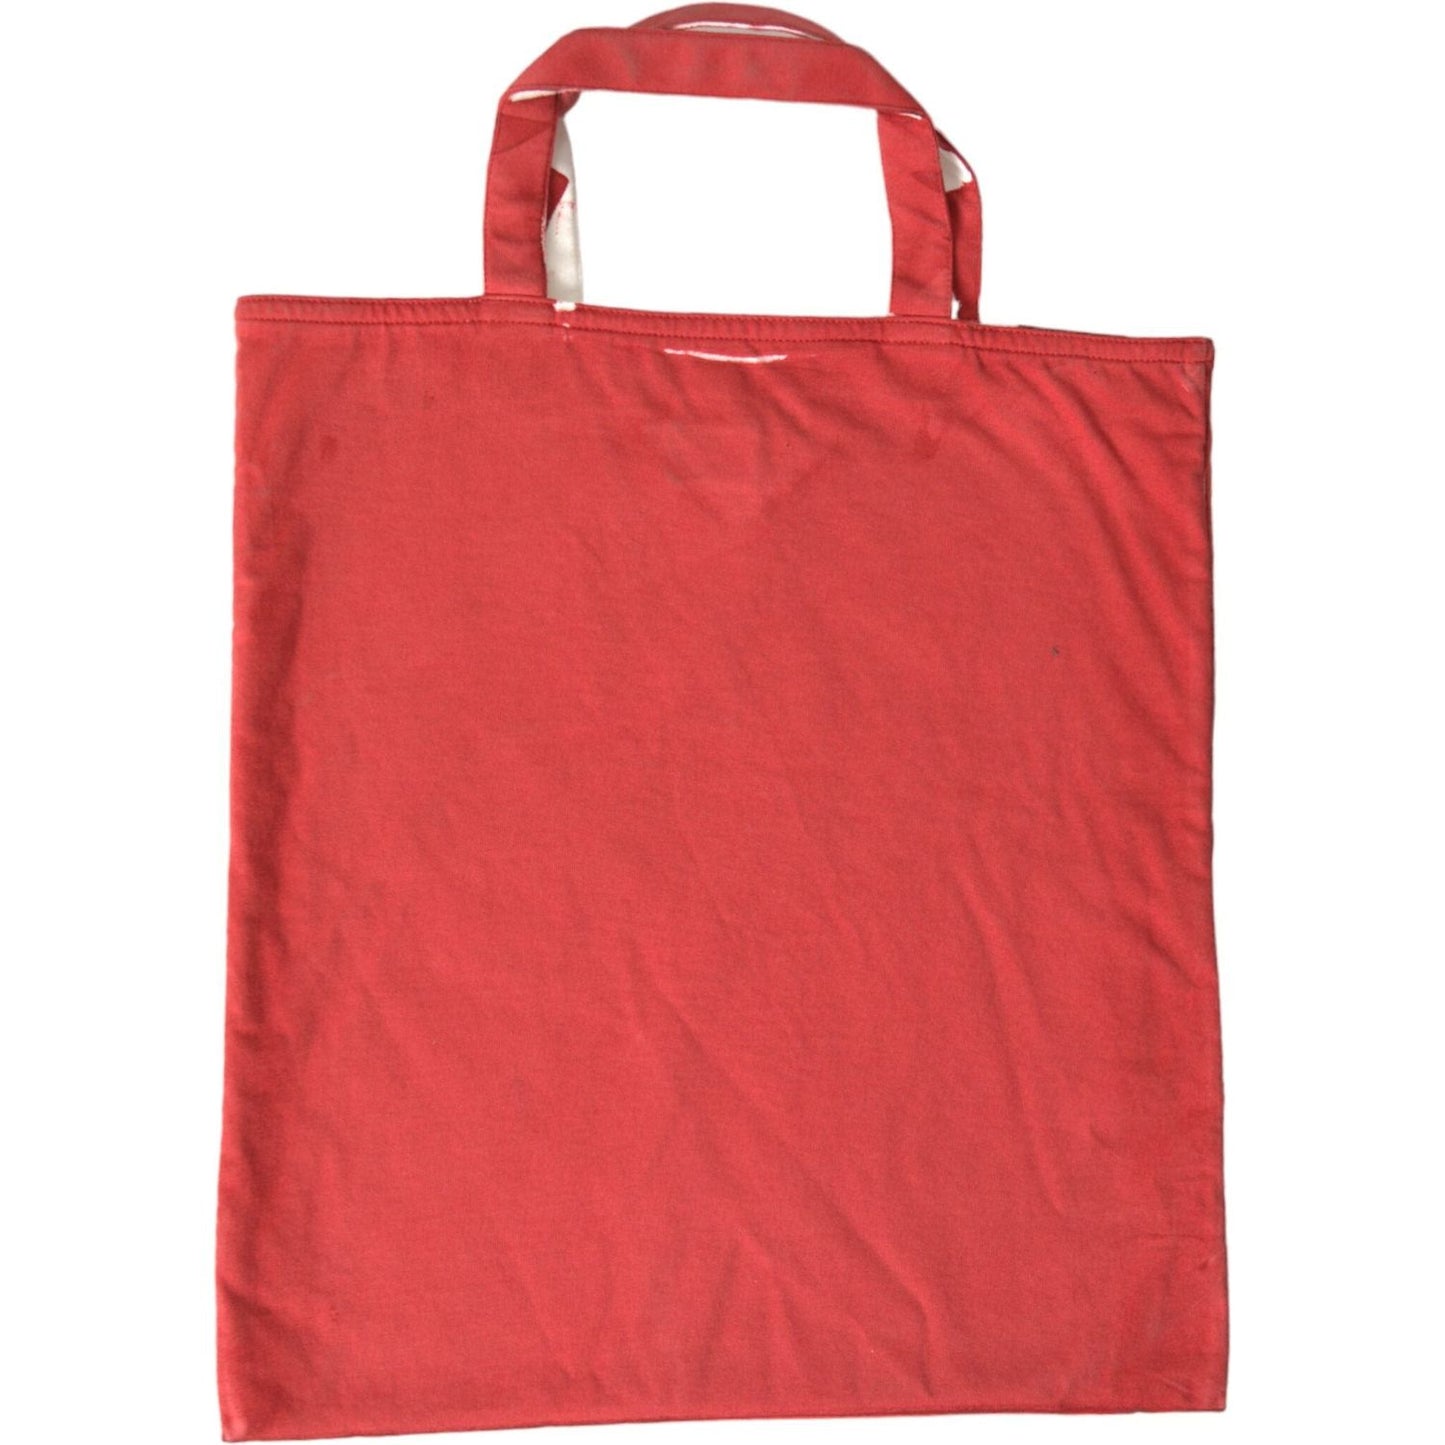 Prada Chic Red and White Fabric Tote Bag chic-red-and-white-fabric-tote-bag